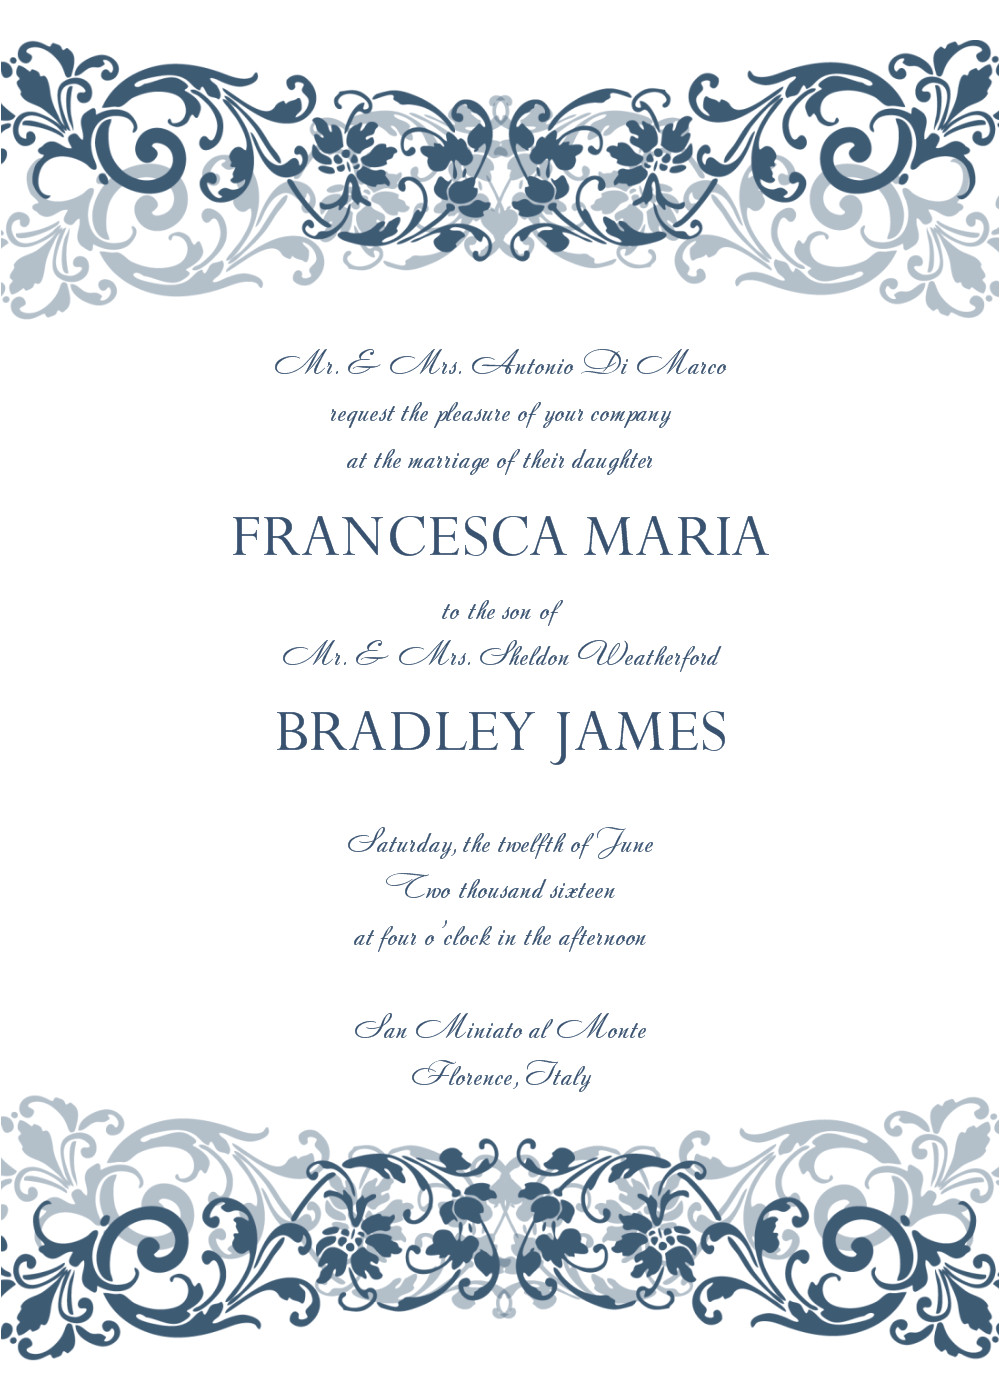 Wedding Invitation HTML Template Free 8 Free Wedding Invitation Templates Excel Pdf formats